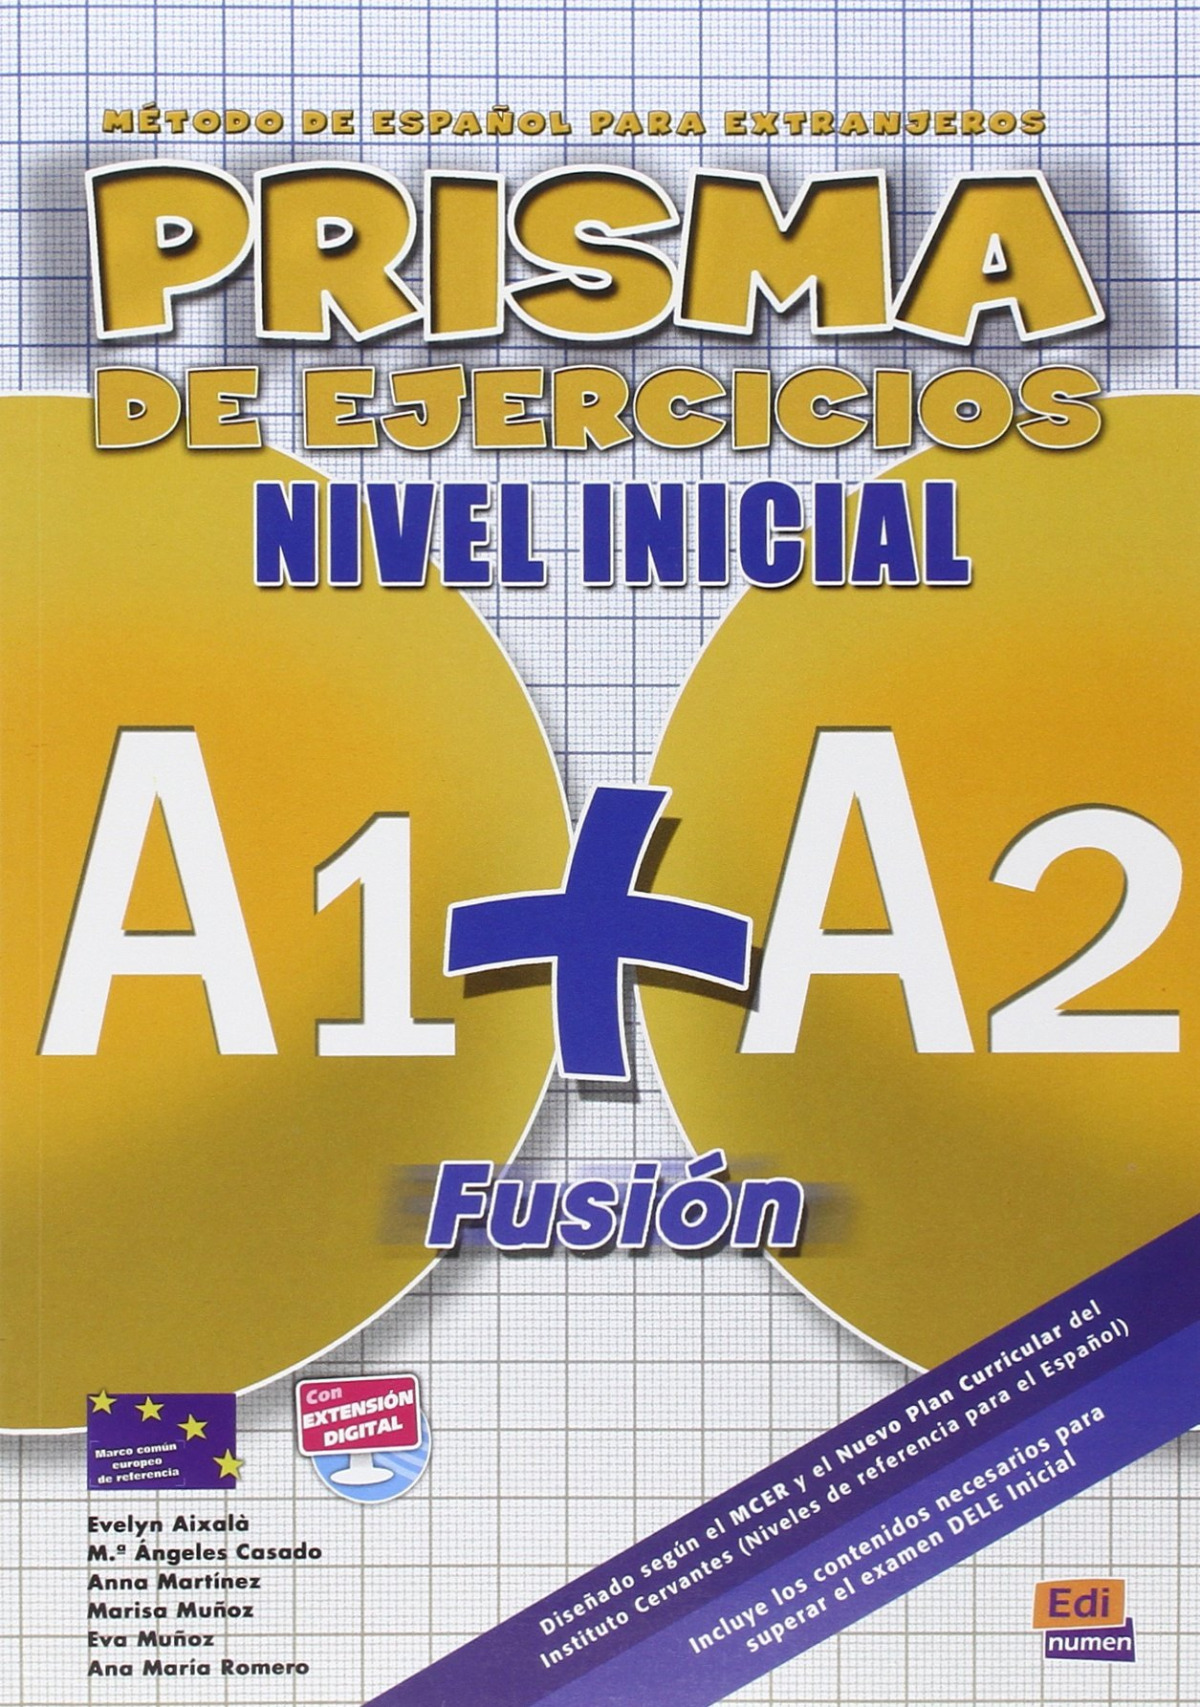 Prisma fusion - Aa.Vv.